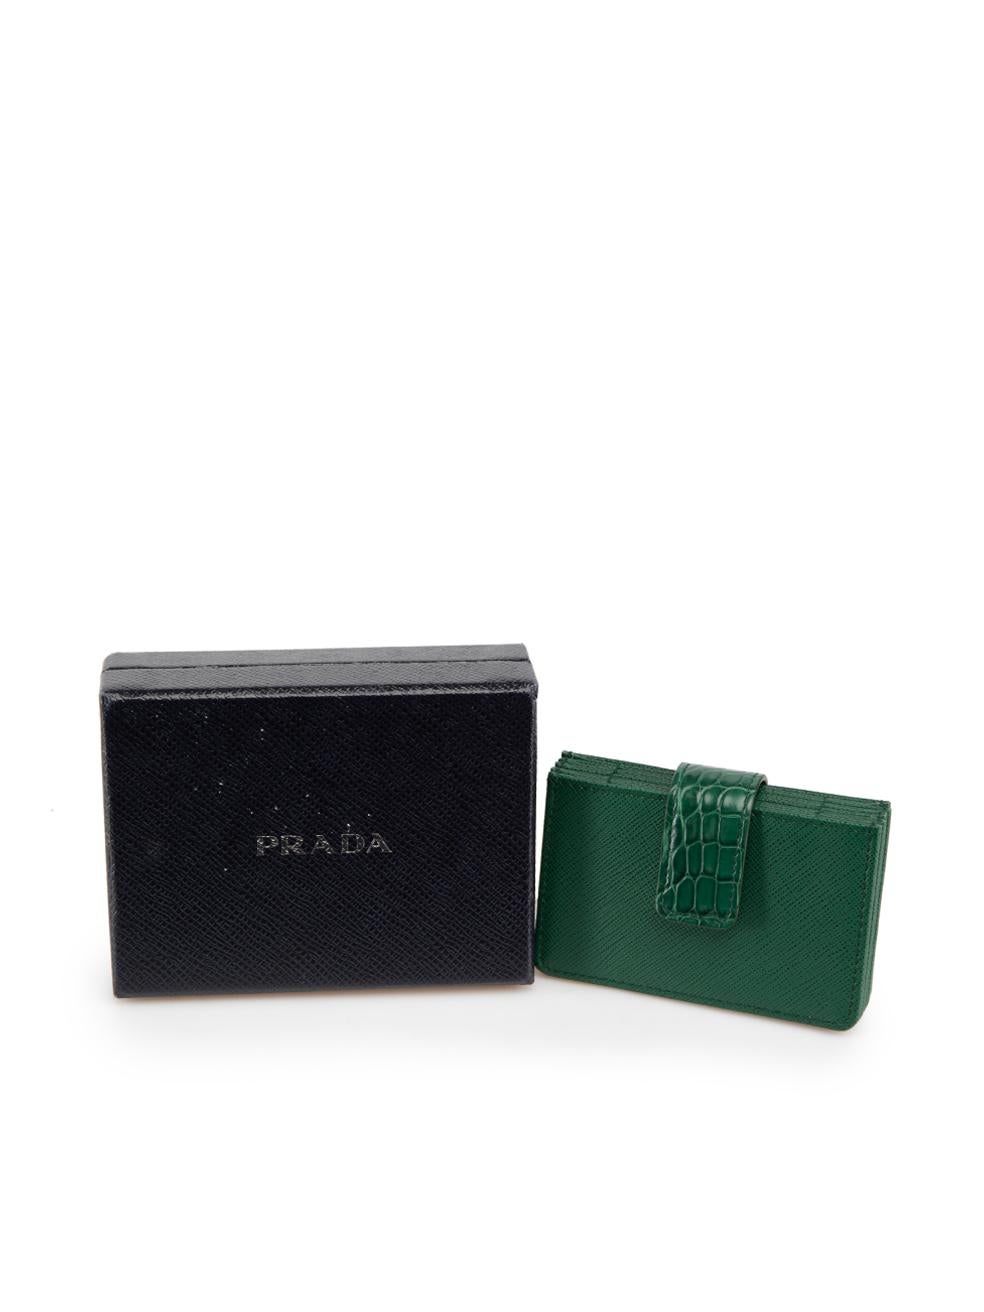 Prada Green Saffiano Leather Accordion Cardholder 2